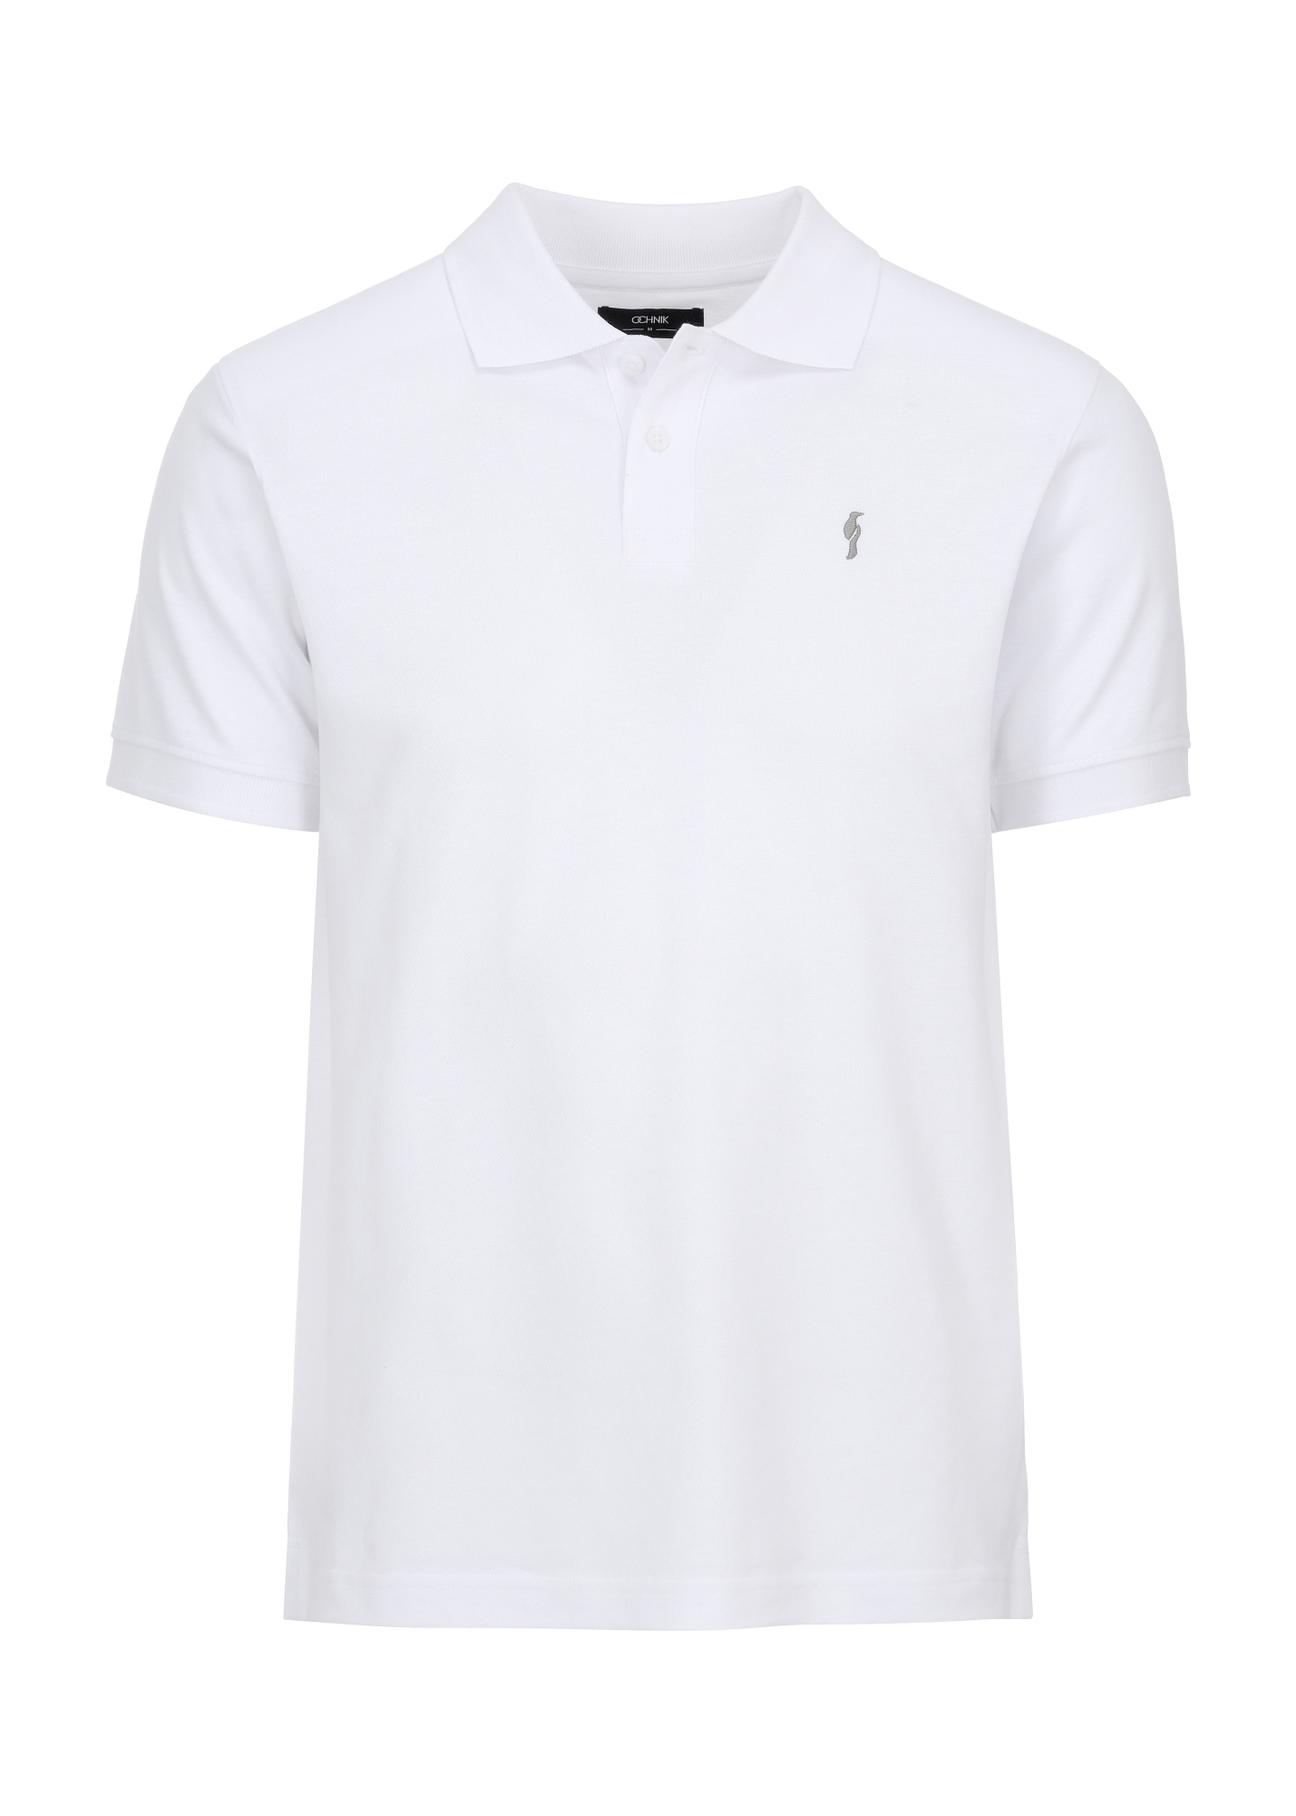 Biała koszulka polo basic męska POLMT-0065-11(W24)